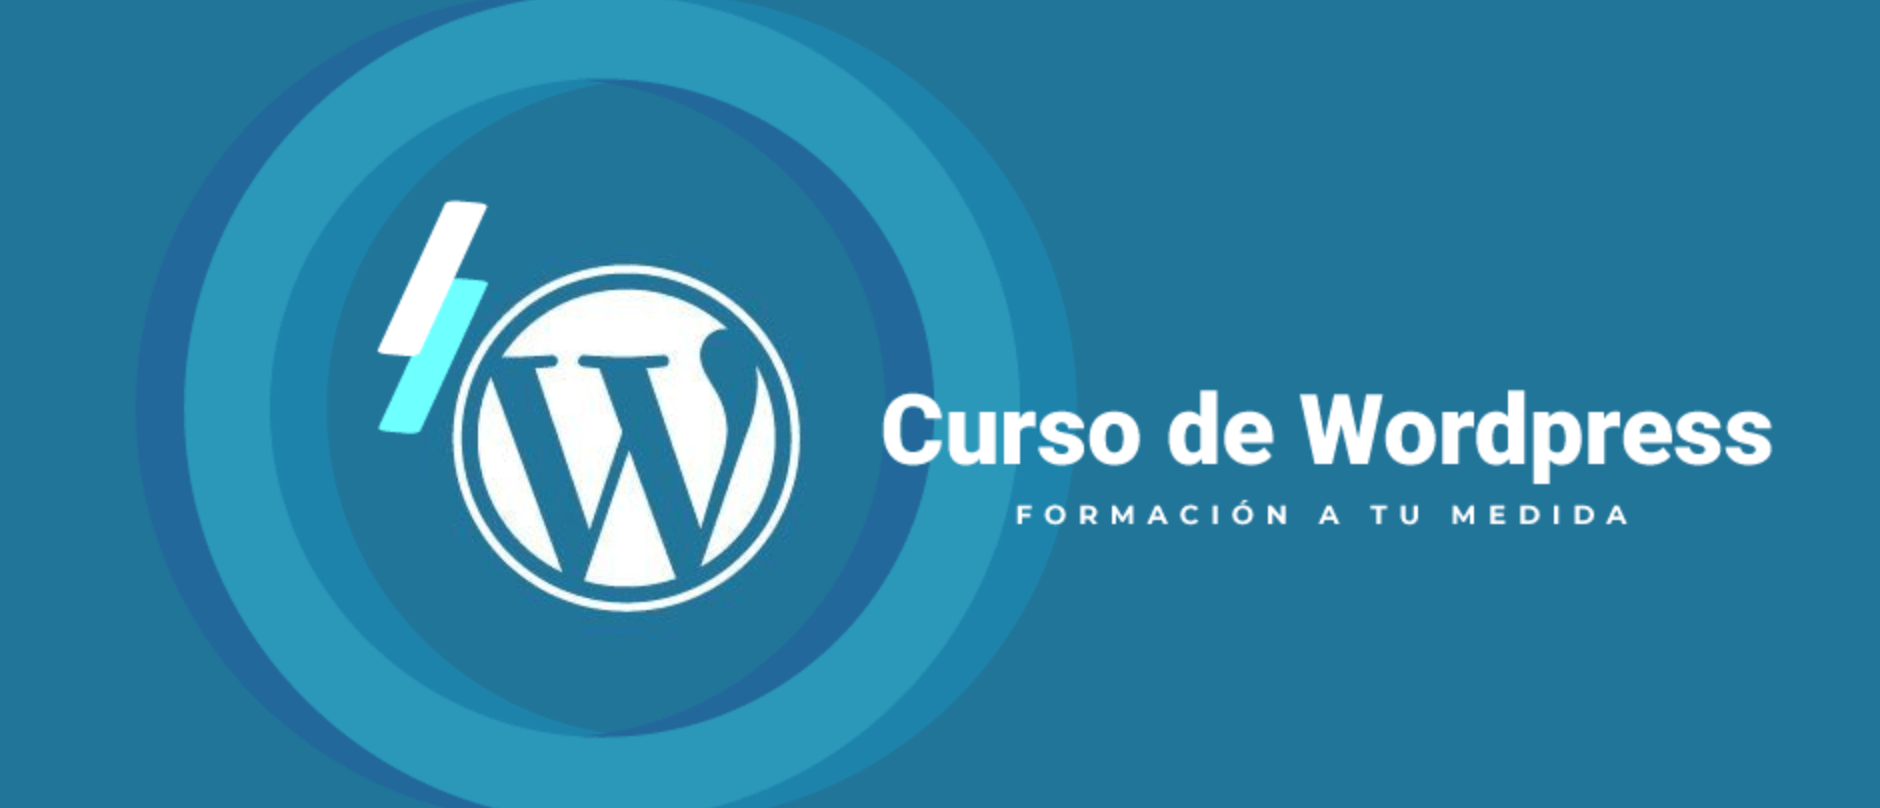 Curso WordPress barcelona